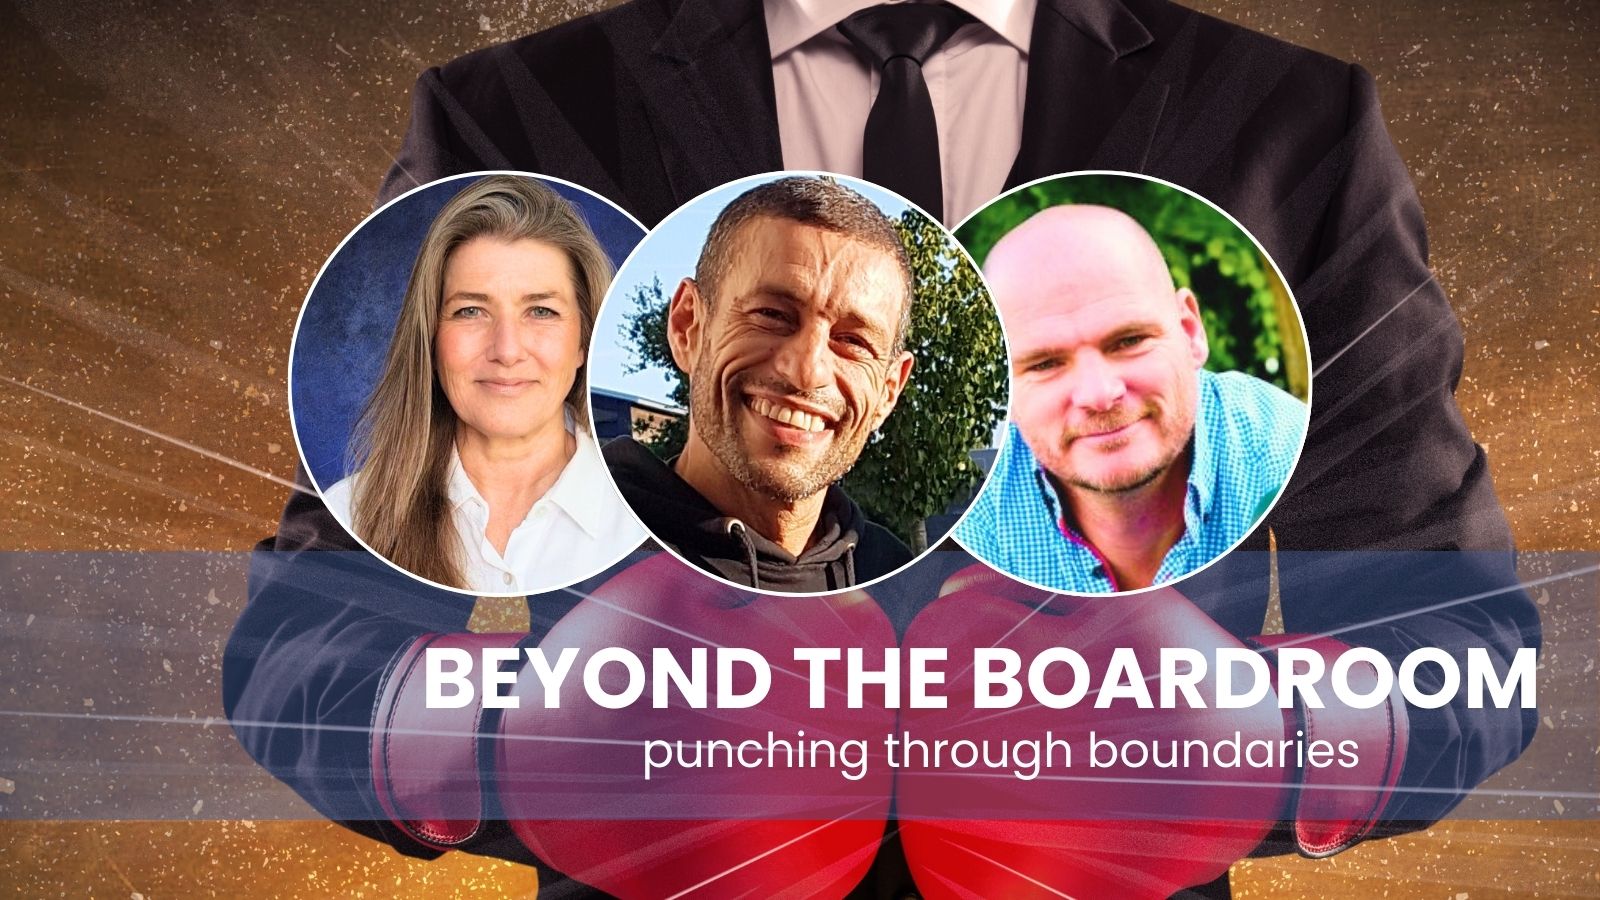 Bedrijfsuitje Zeeland: Beyond the boardroom